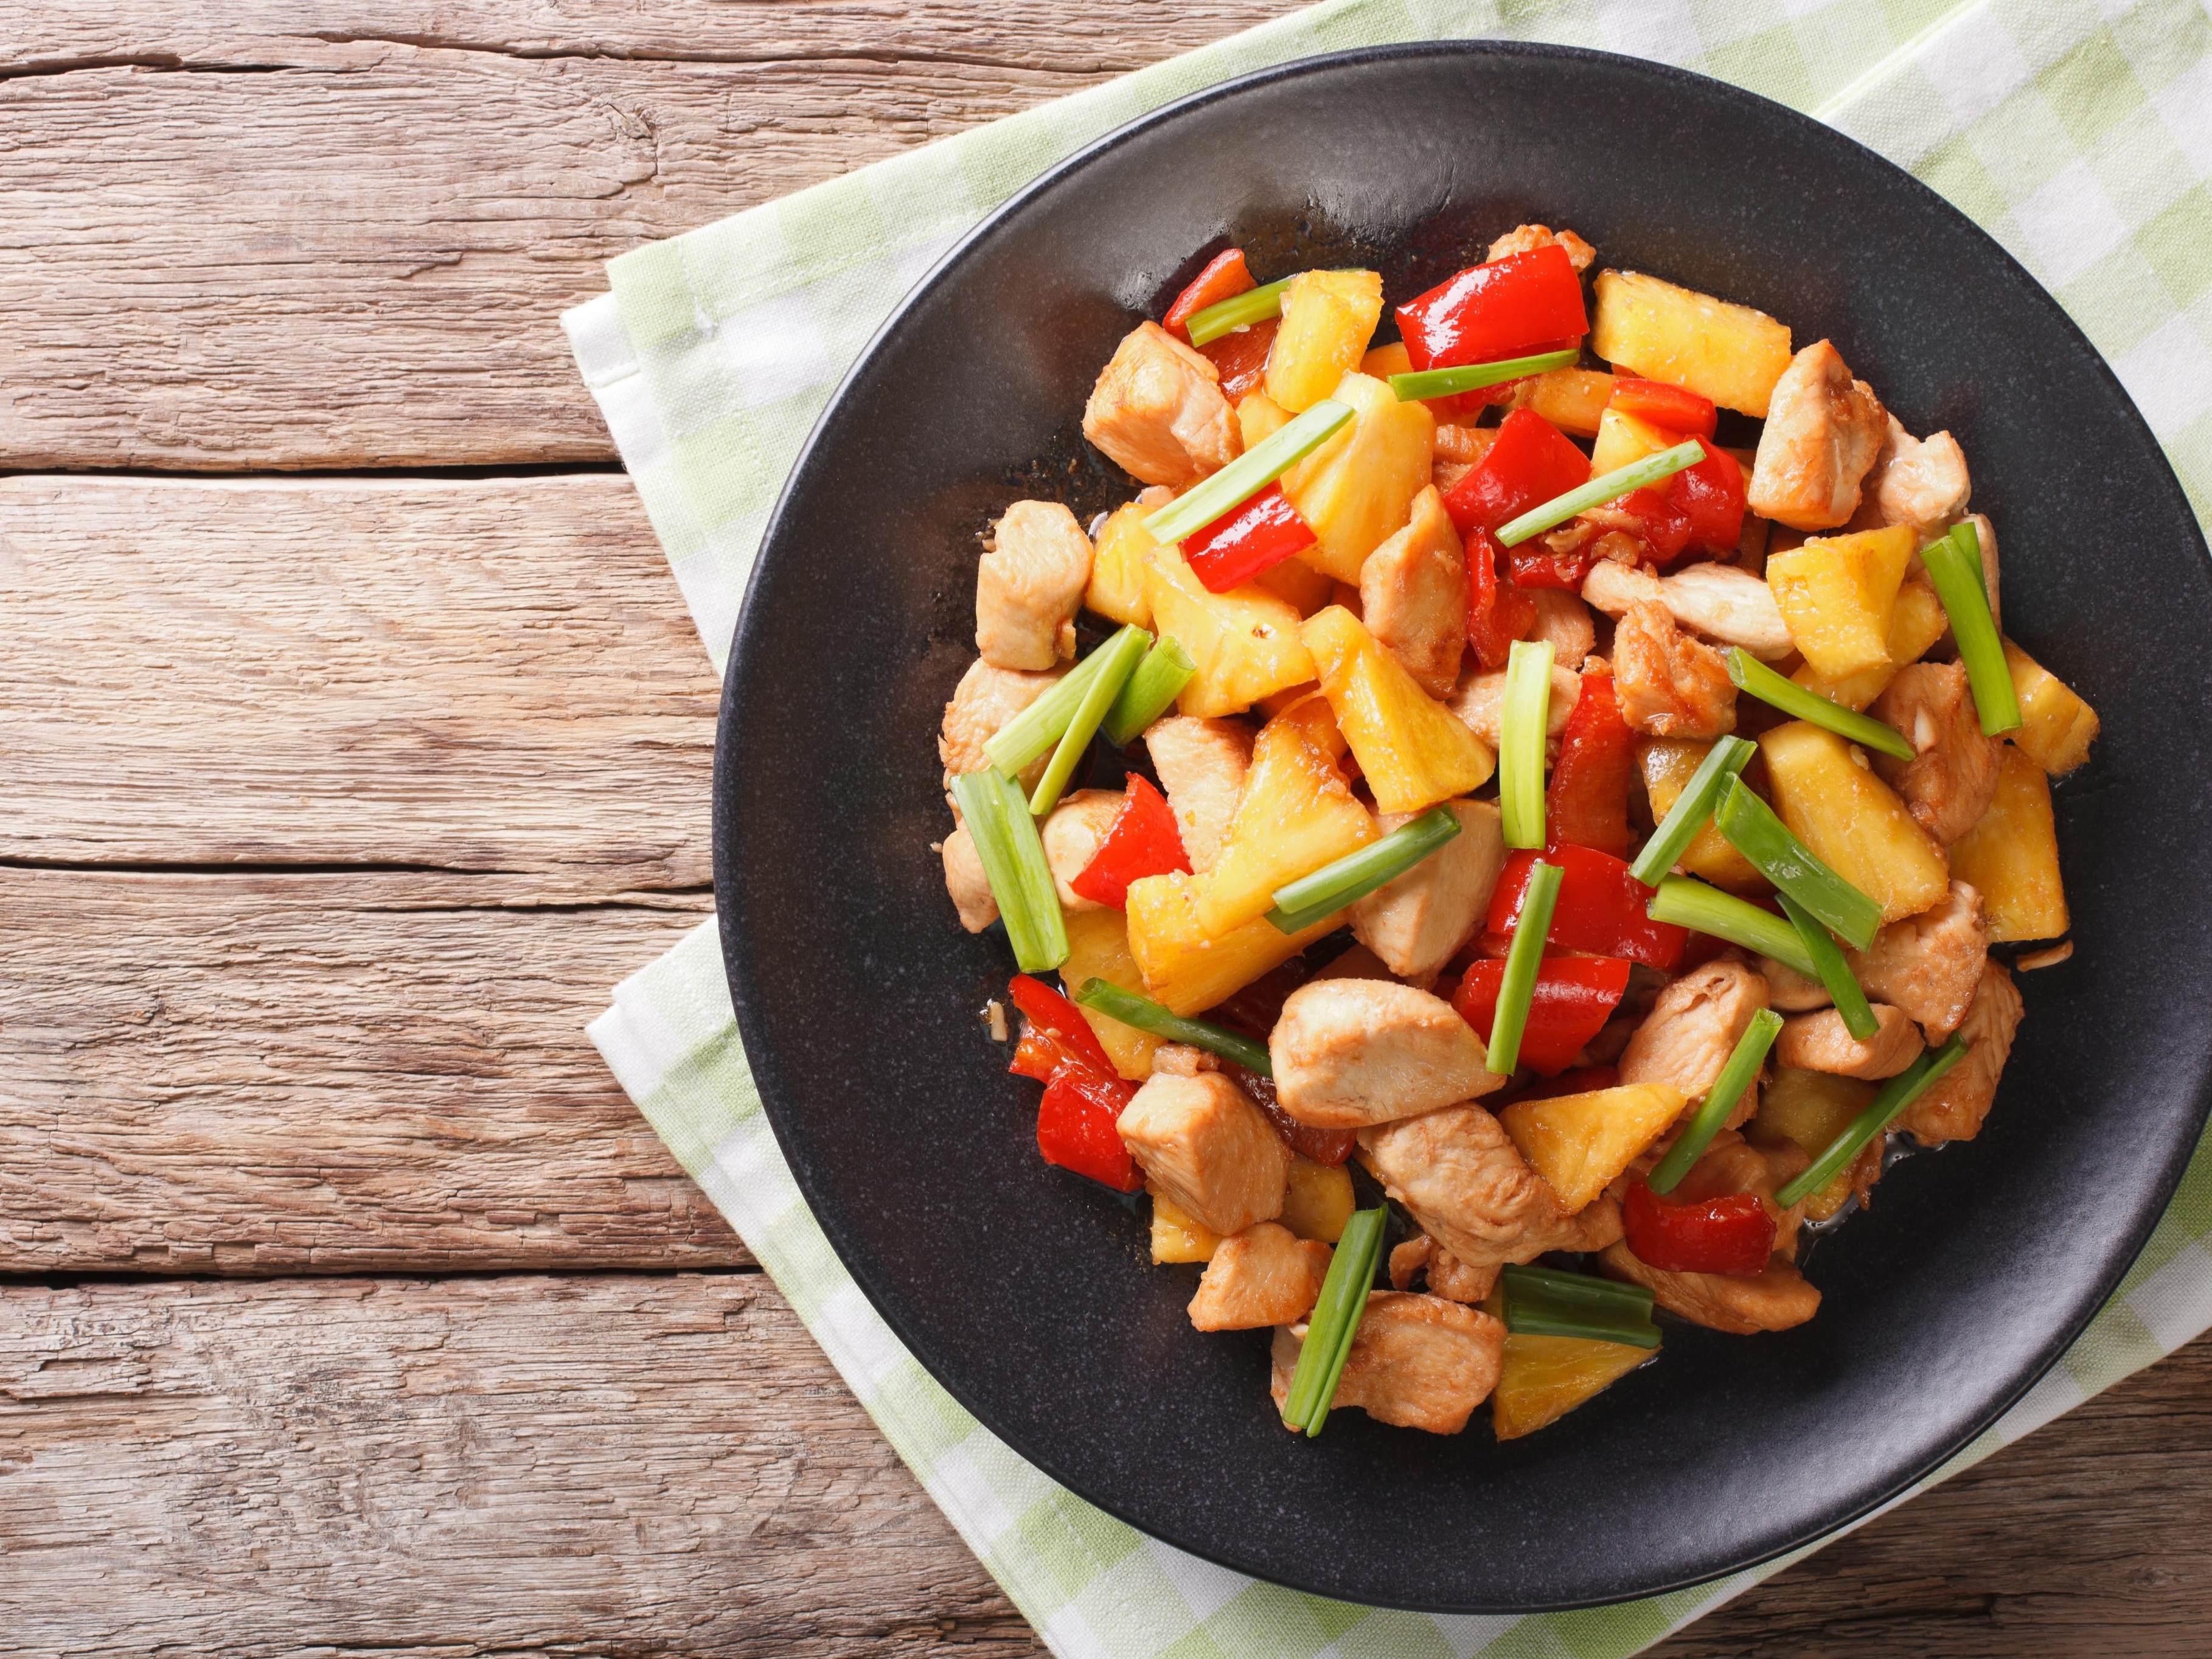 Sos receitas rápidas: perú no wok com legumes congelados - Receita